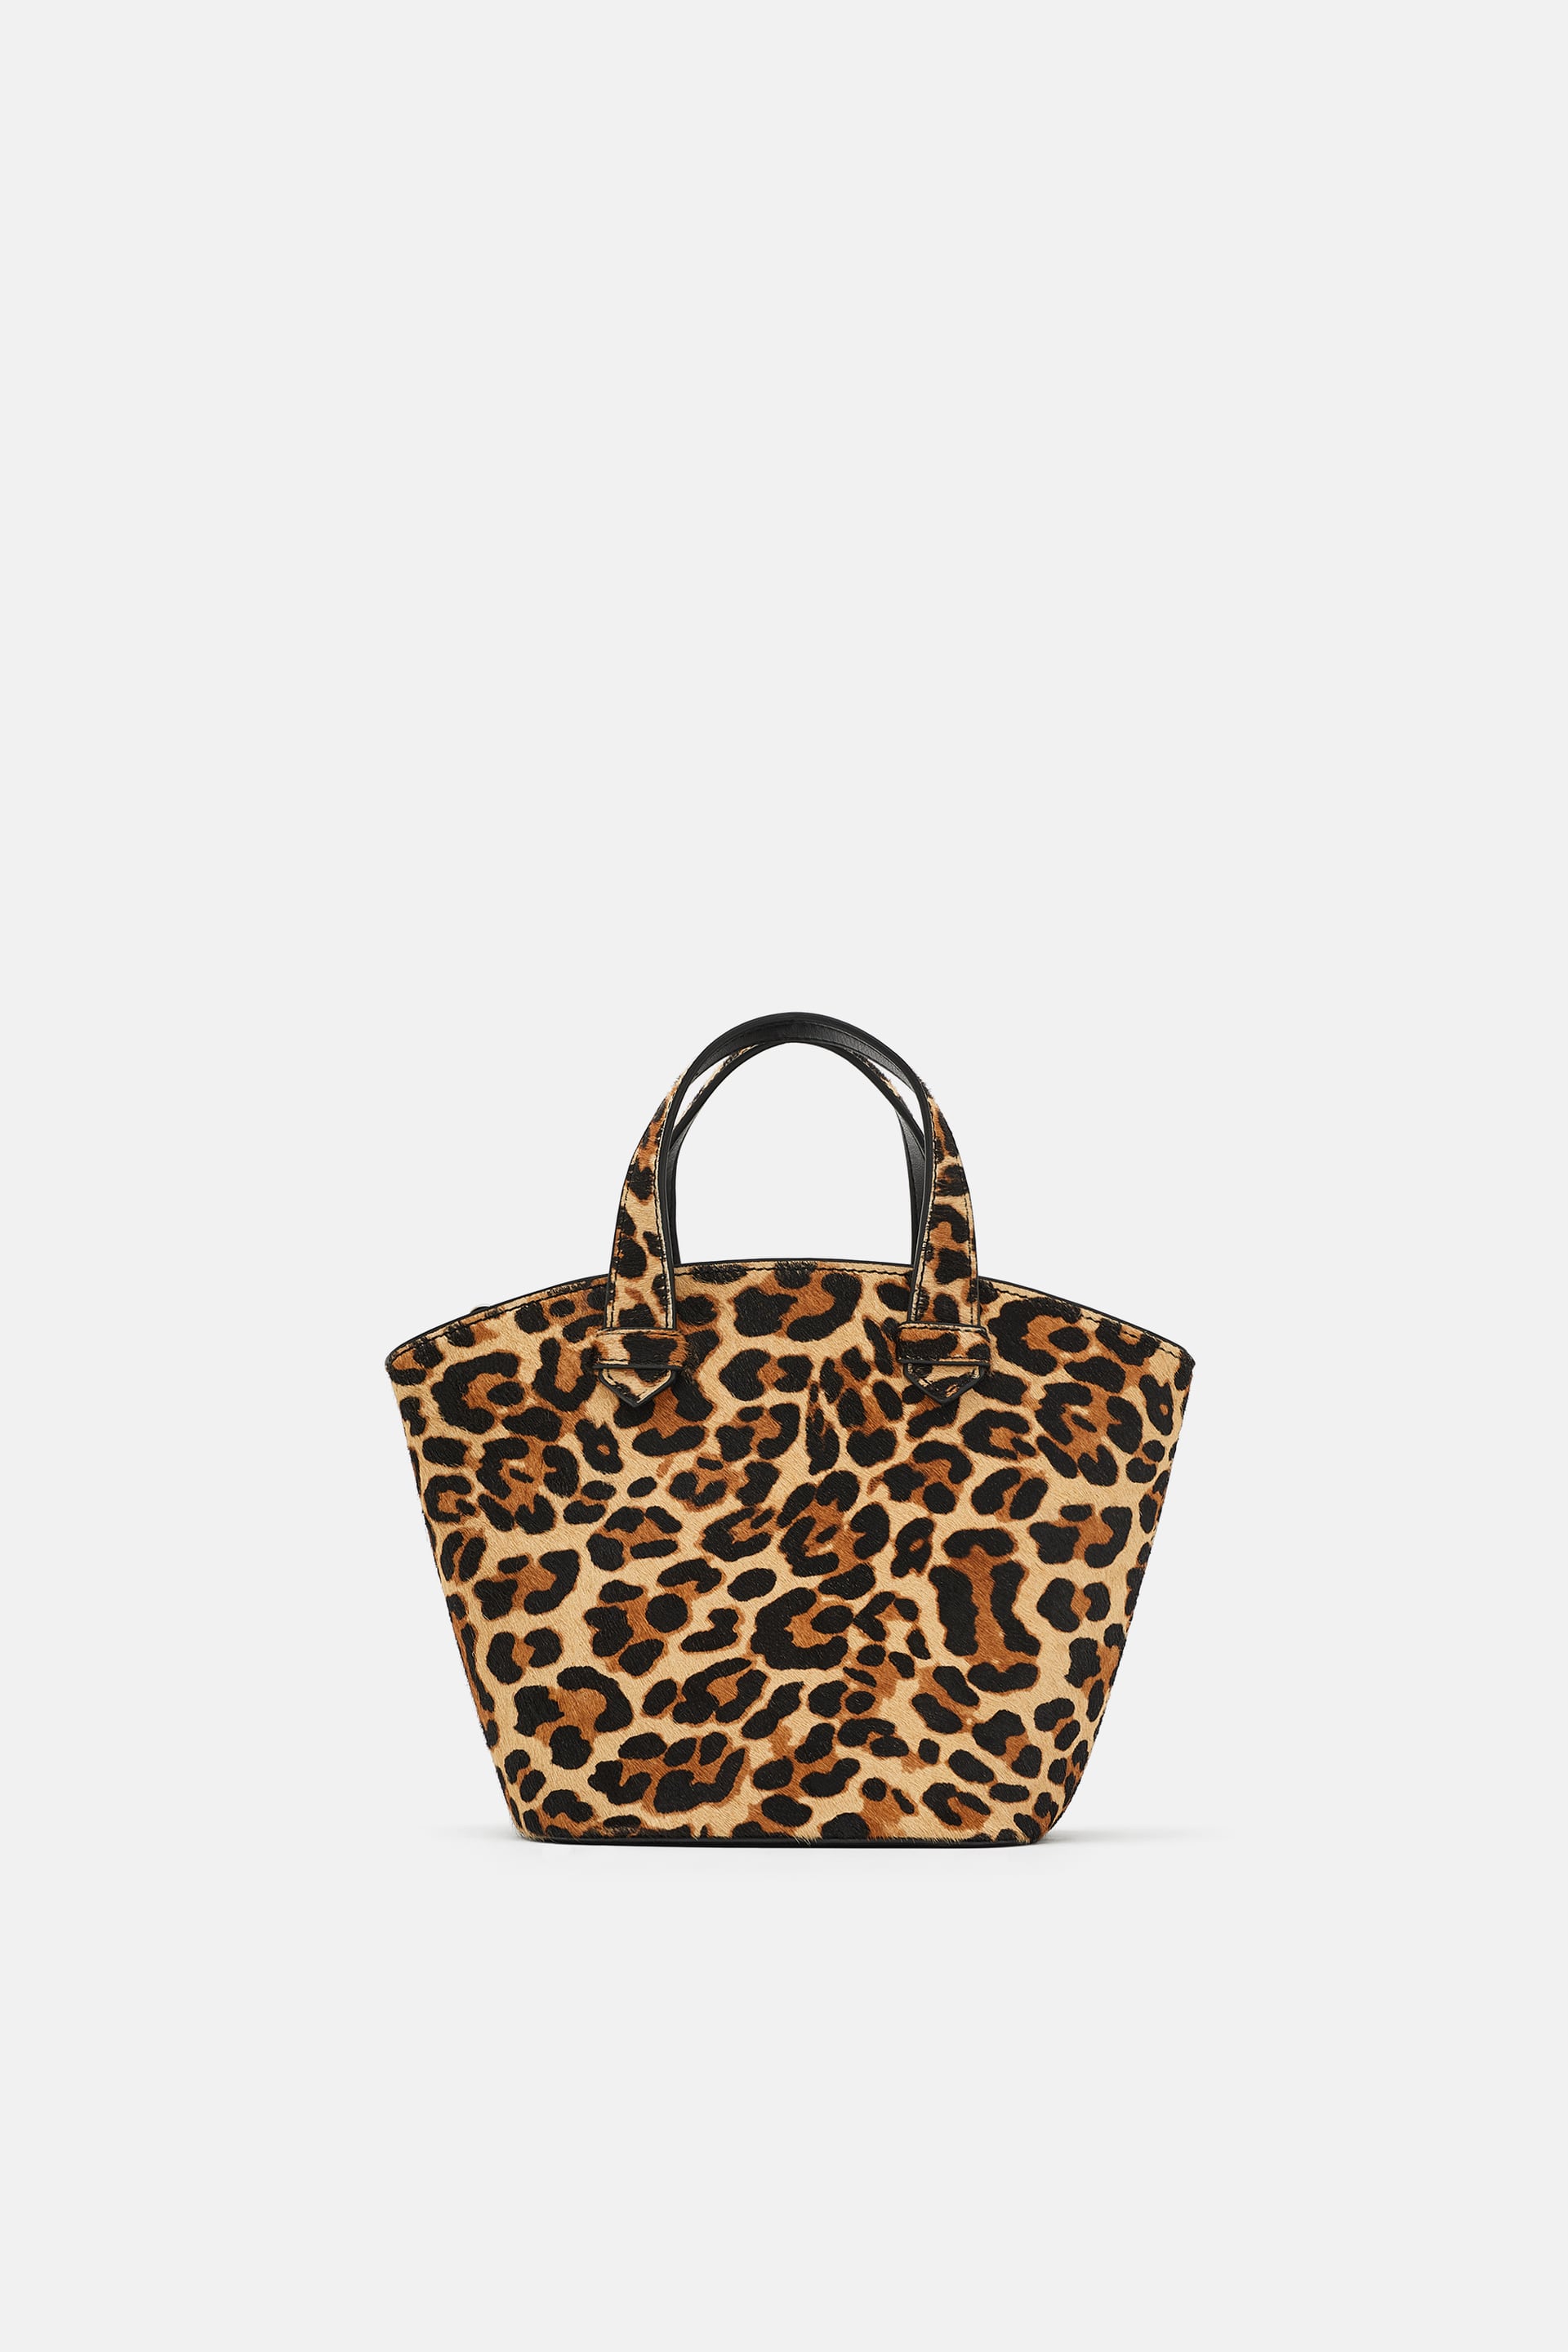 zara leopard bag